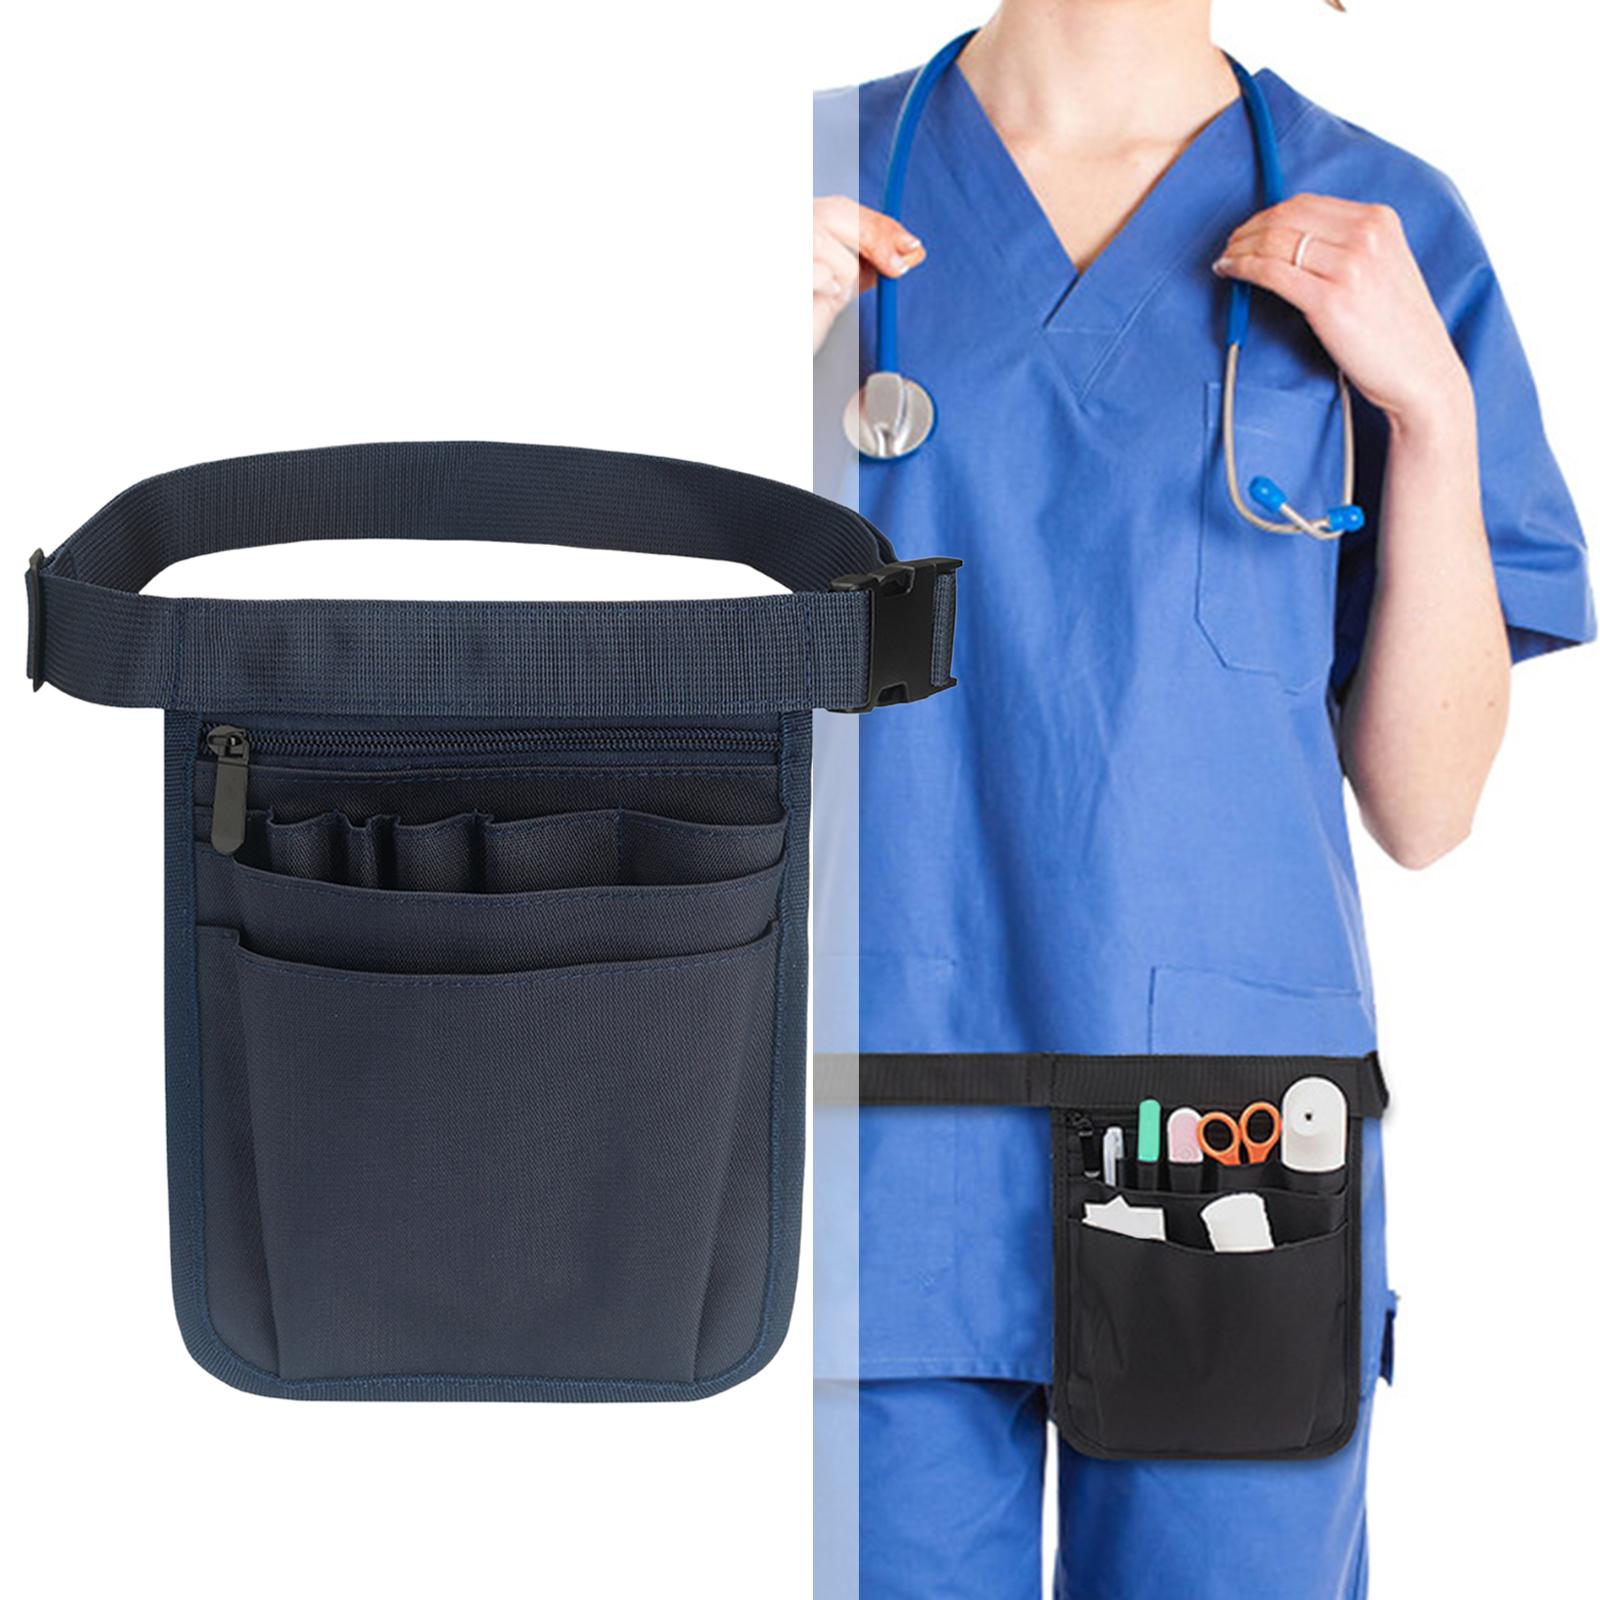 Kangapak Nurse Fanny Pack Multi Compartment Waist Organizer Tool Bag –  Nursingtools